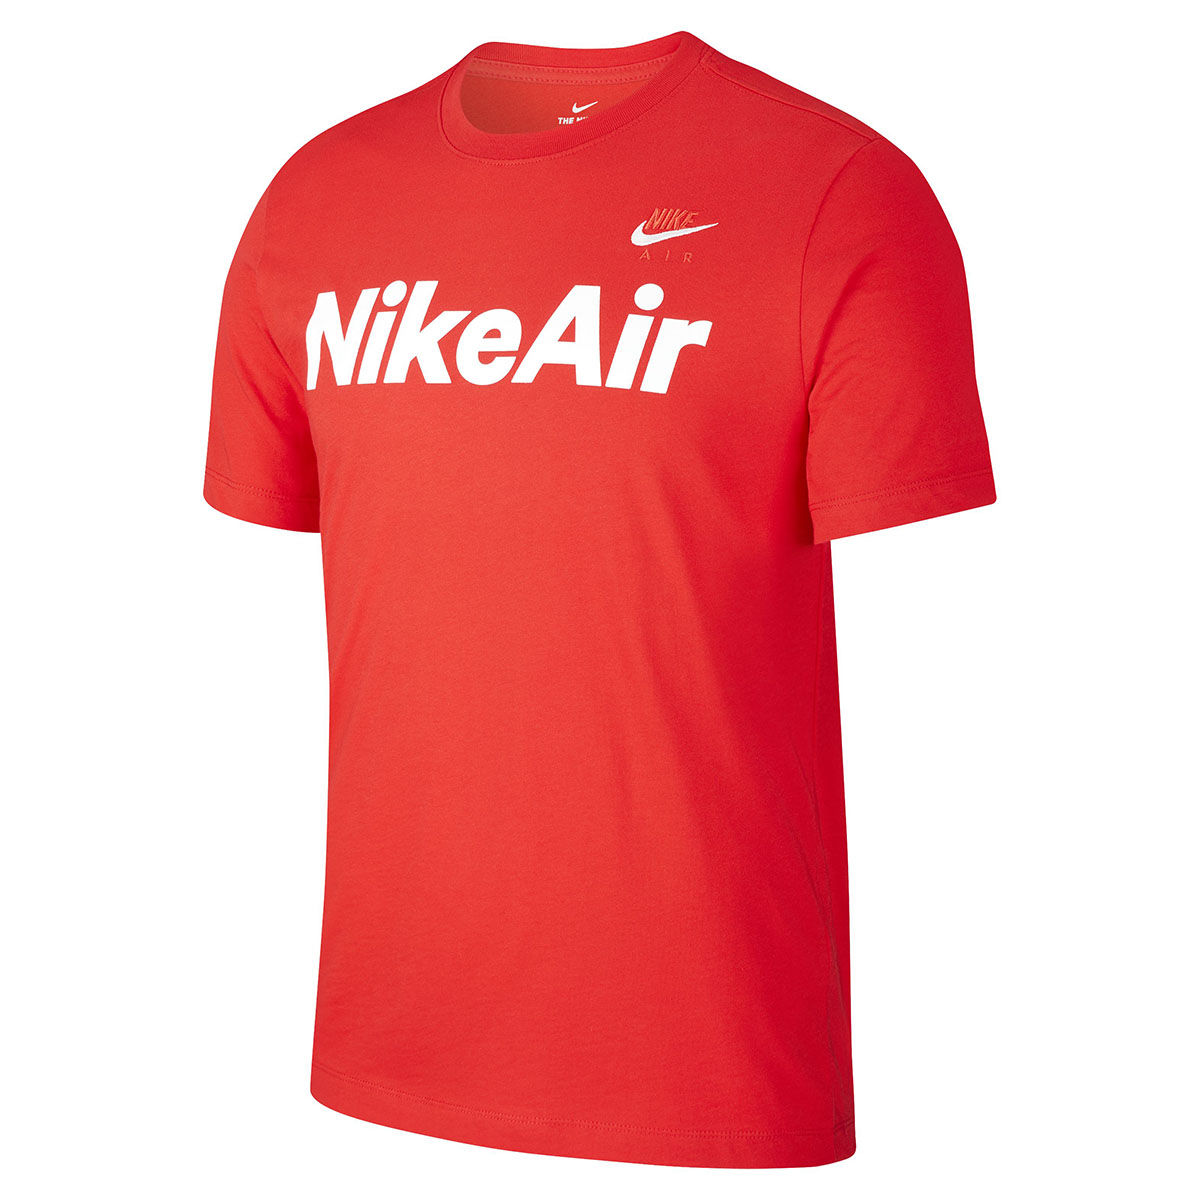 Remera Nike Air,  image number null